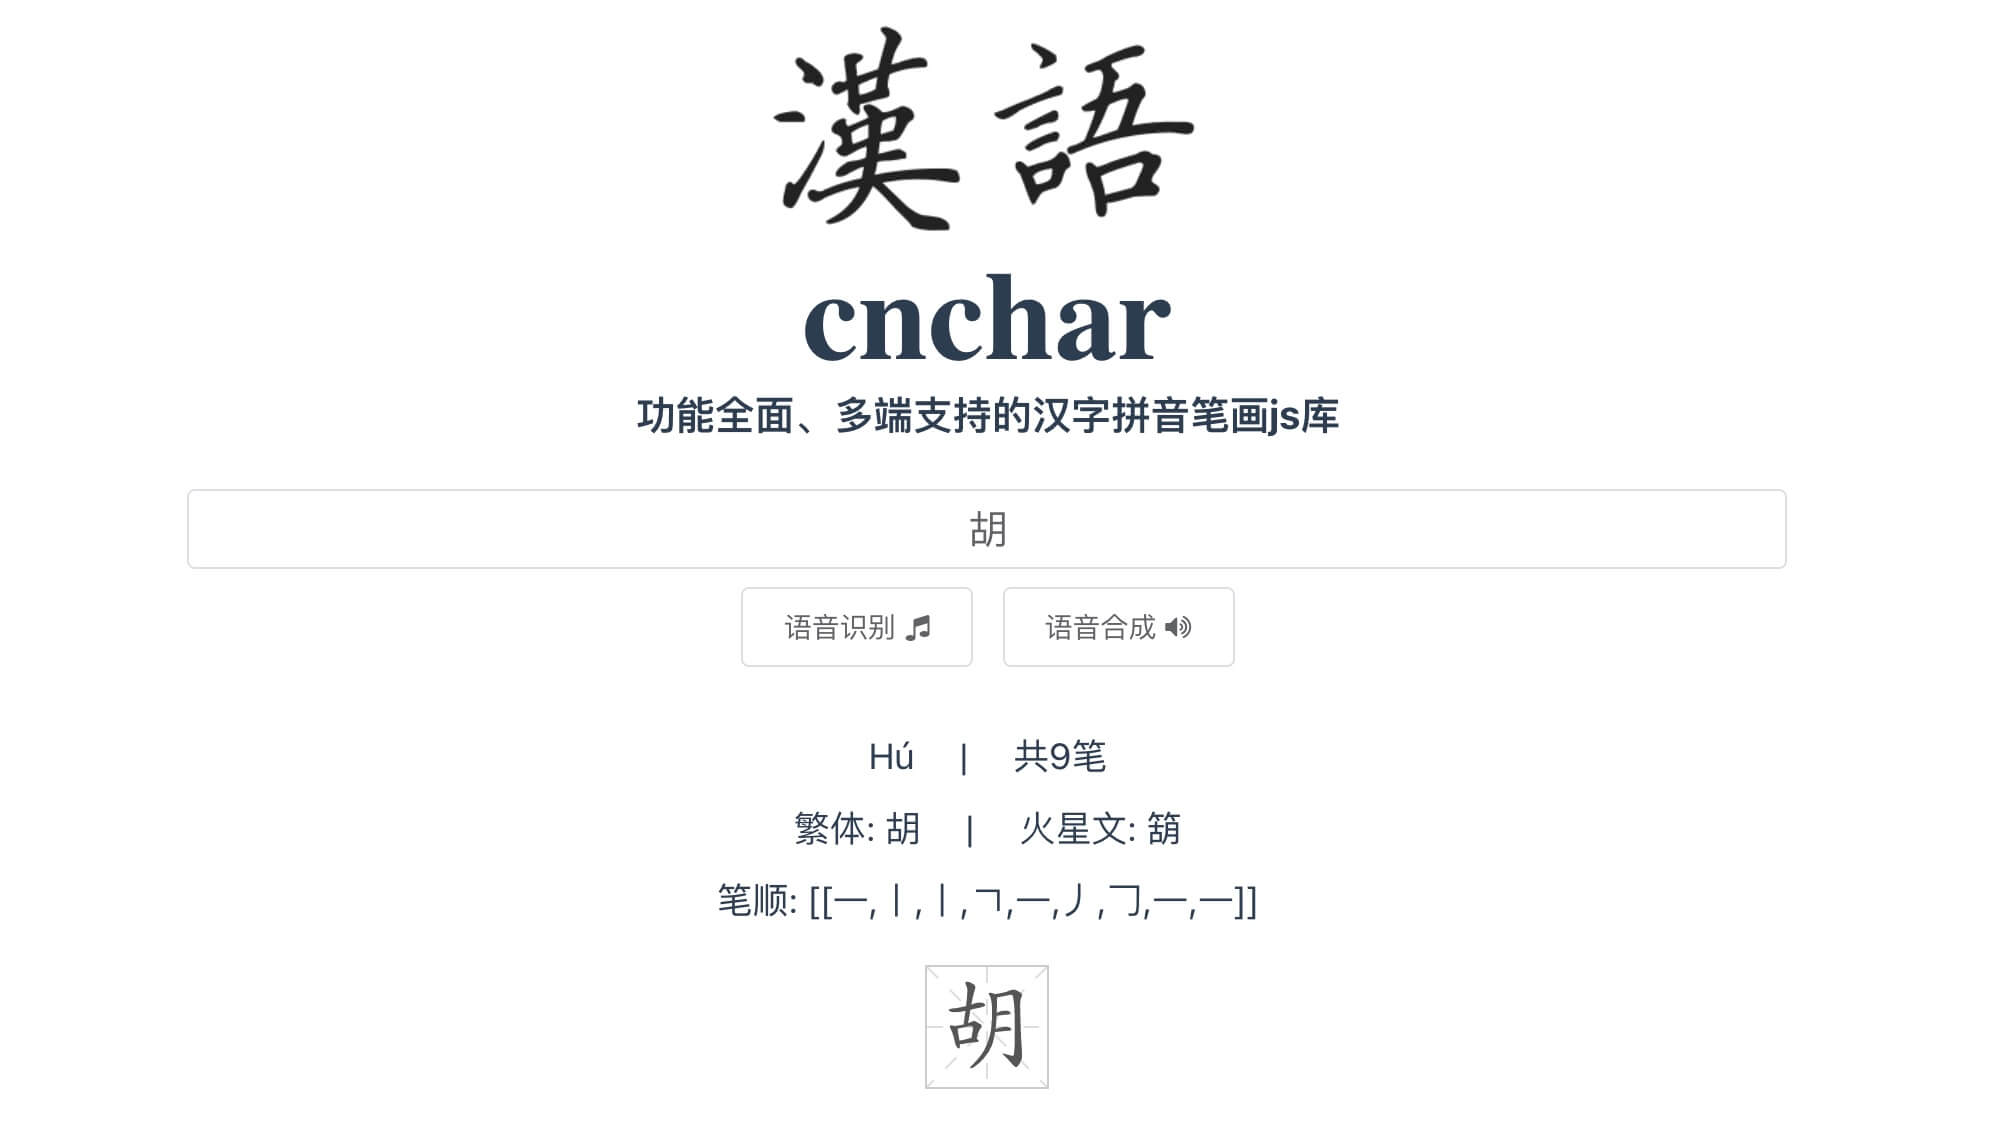 cnchar